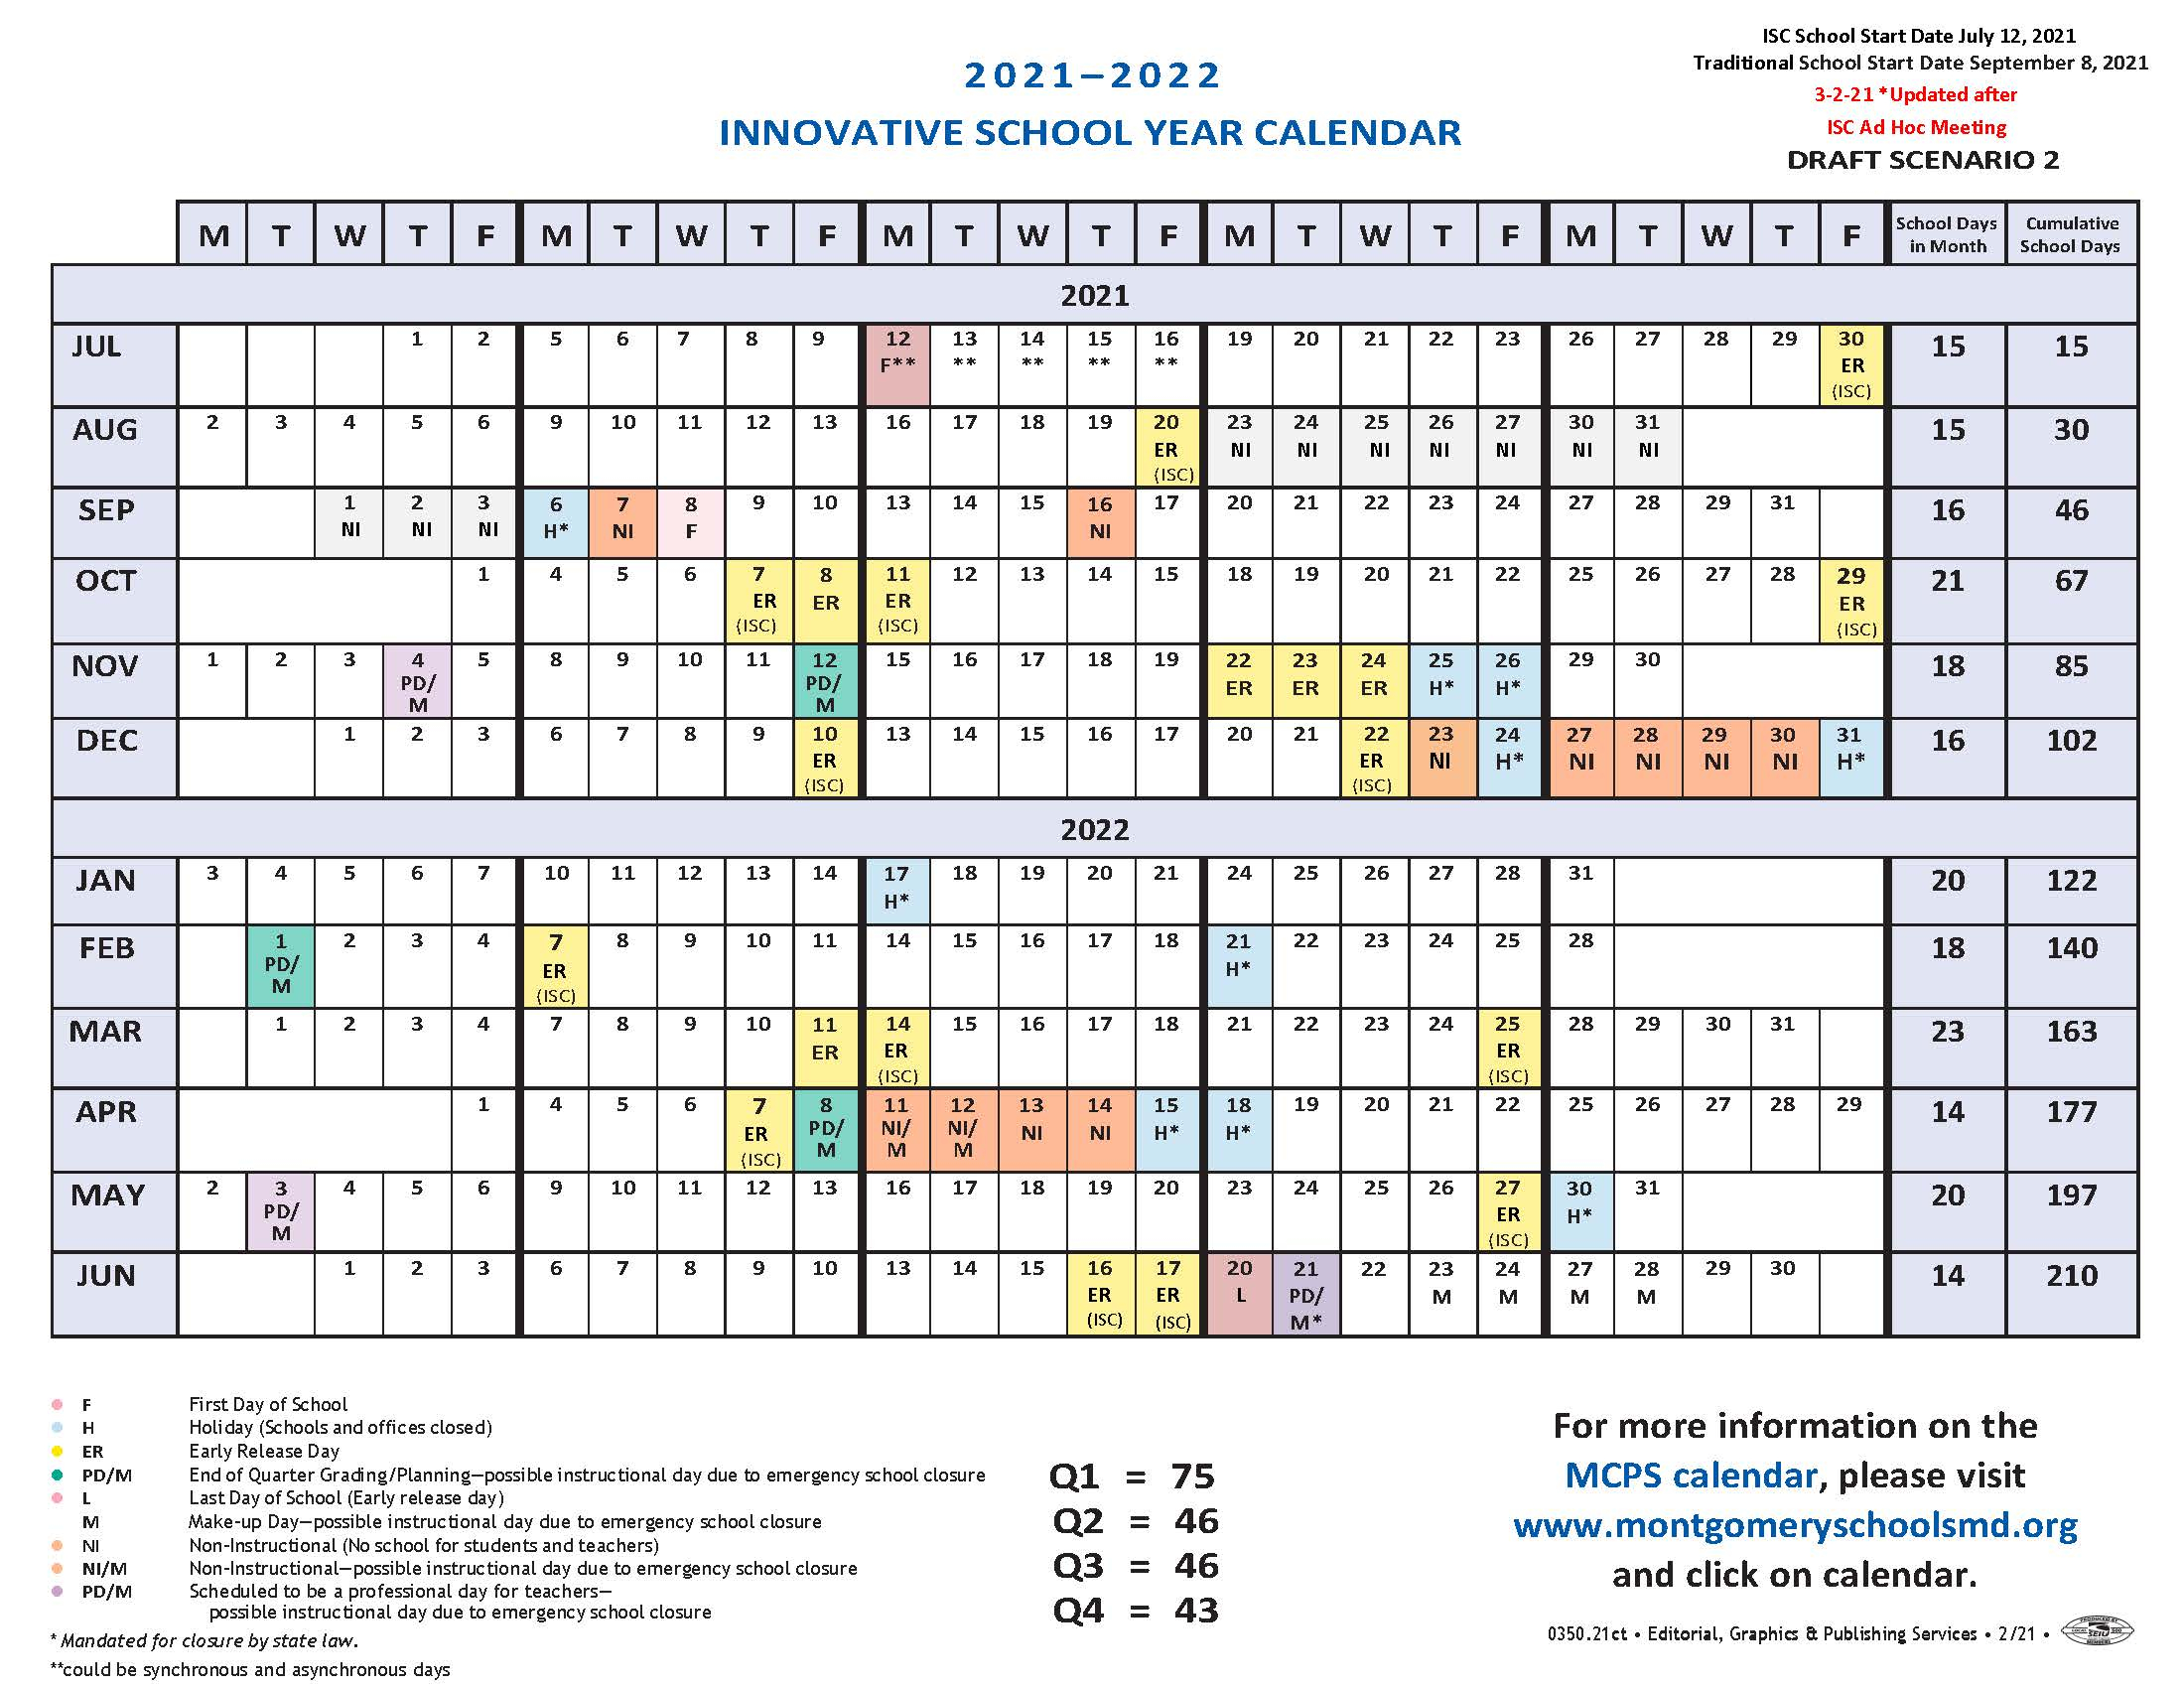 Cmcss Calendar